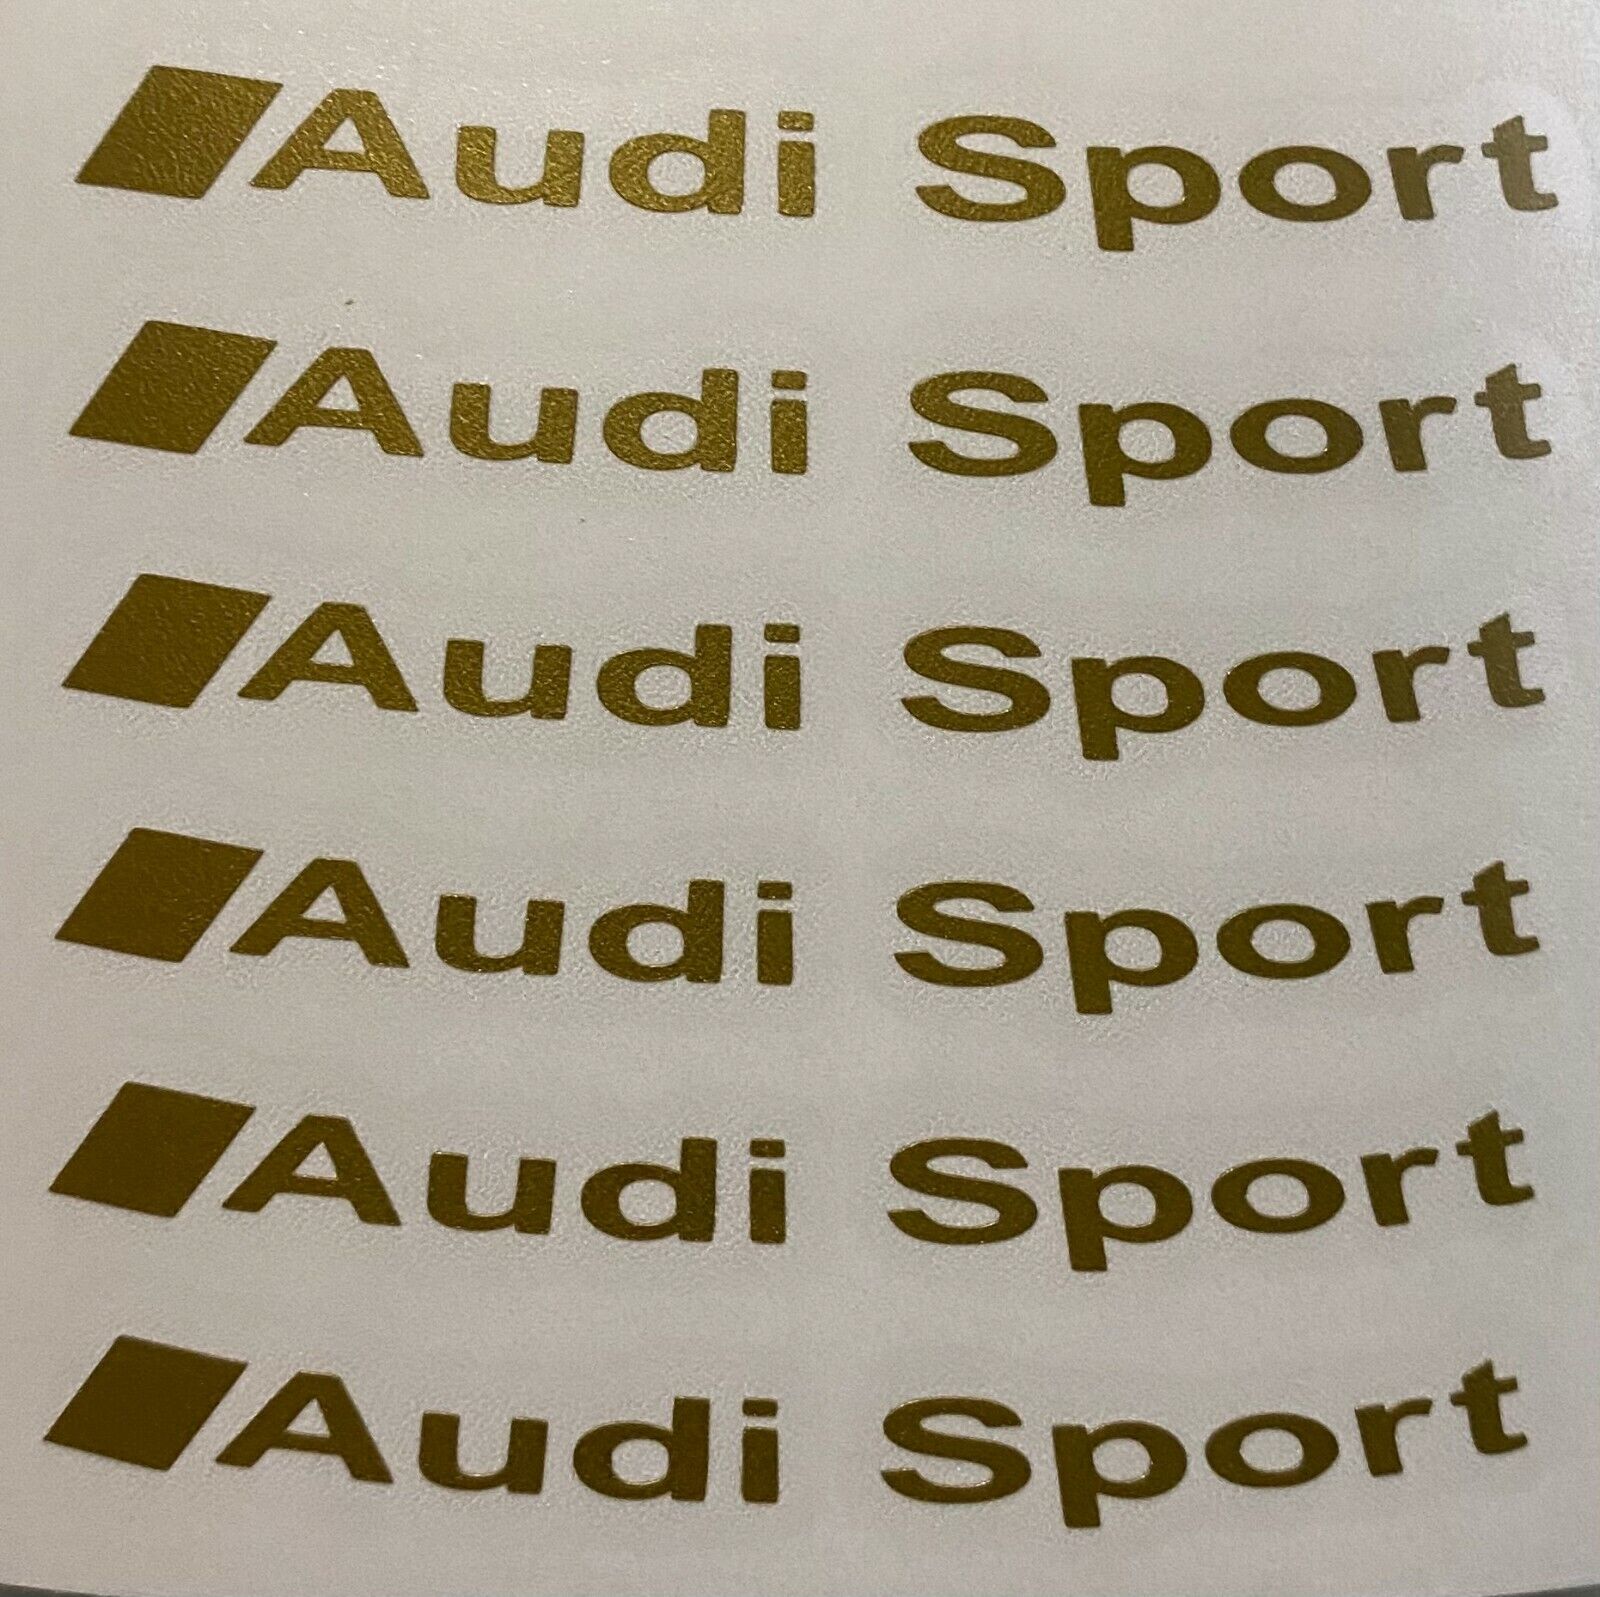 Audi Sport Wheel Decal Sticker Vinyl Brake Heat Resistant Many Colors